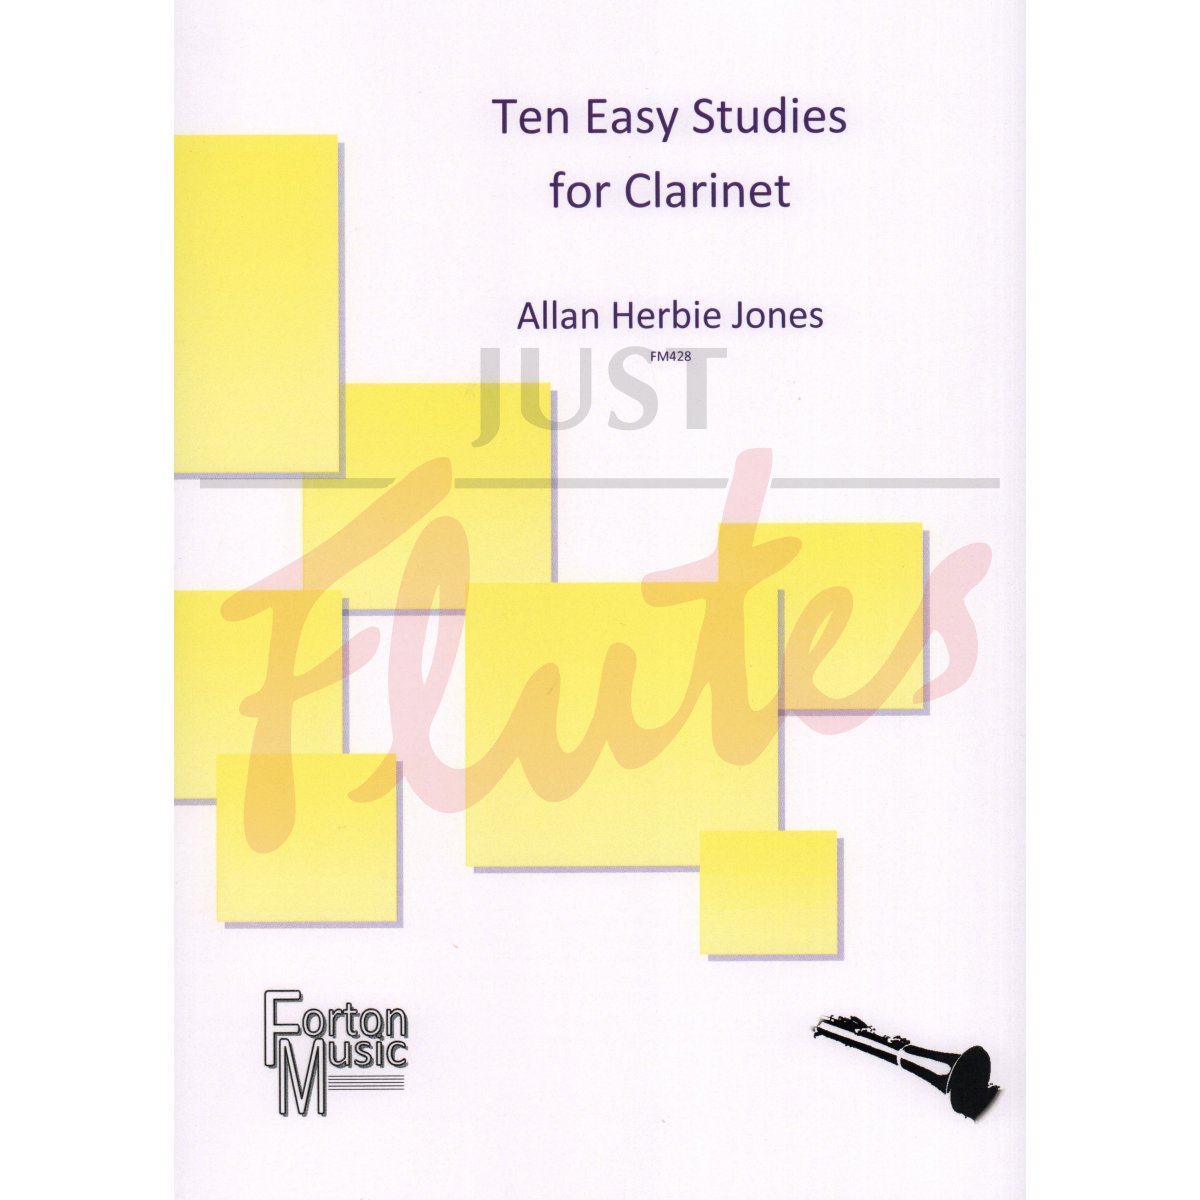 Ten Easy Studies for Clarinet